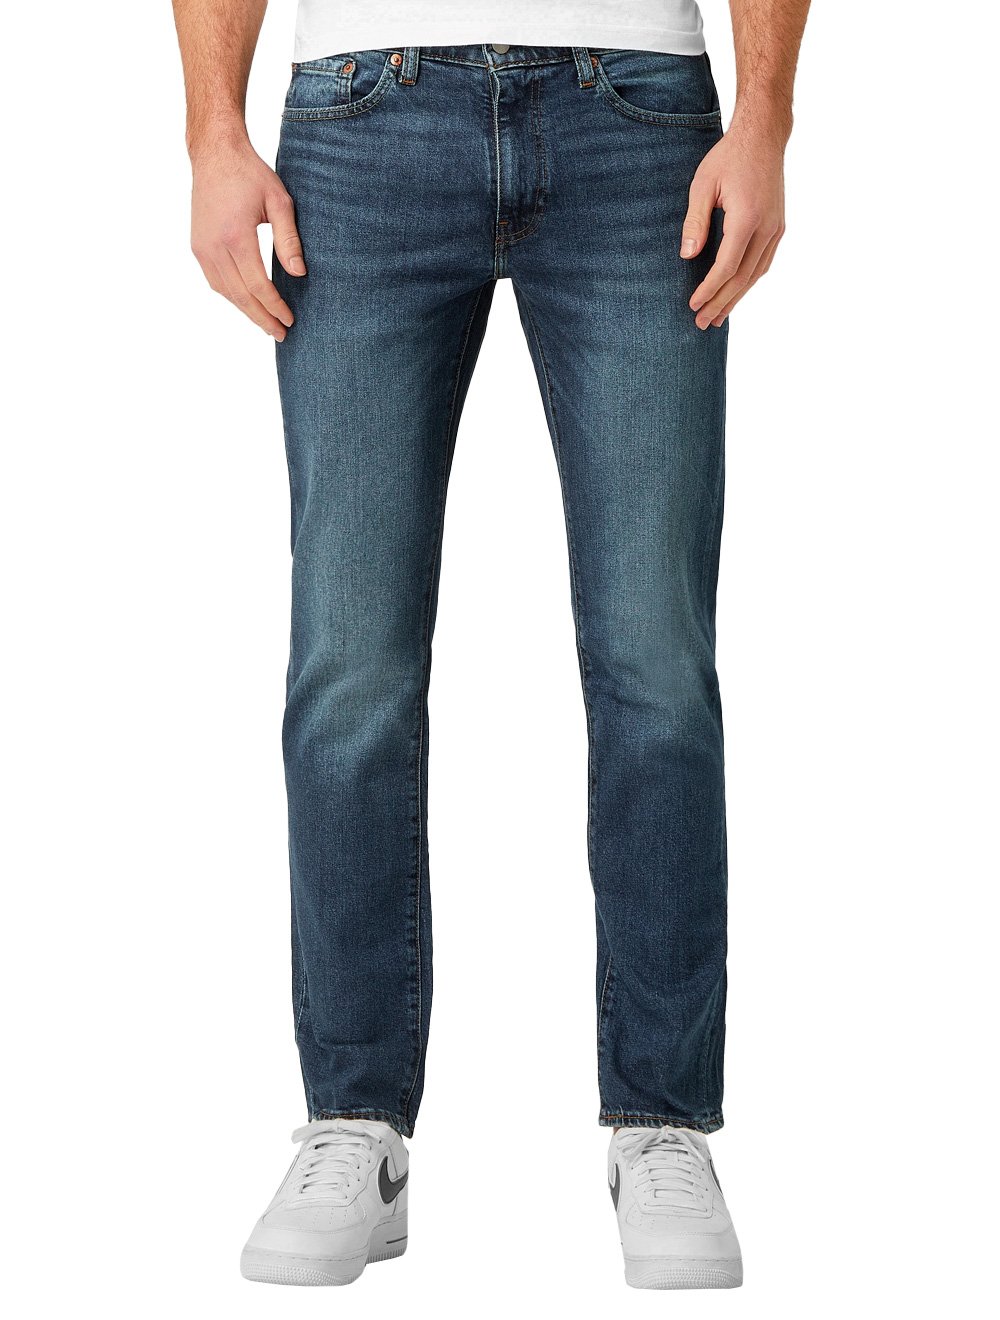 Calça Levis Jeans Masculina 511 Slim Stretch Eco Perfomance Azul Escuro